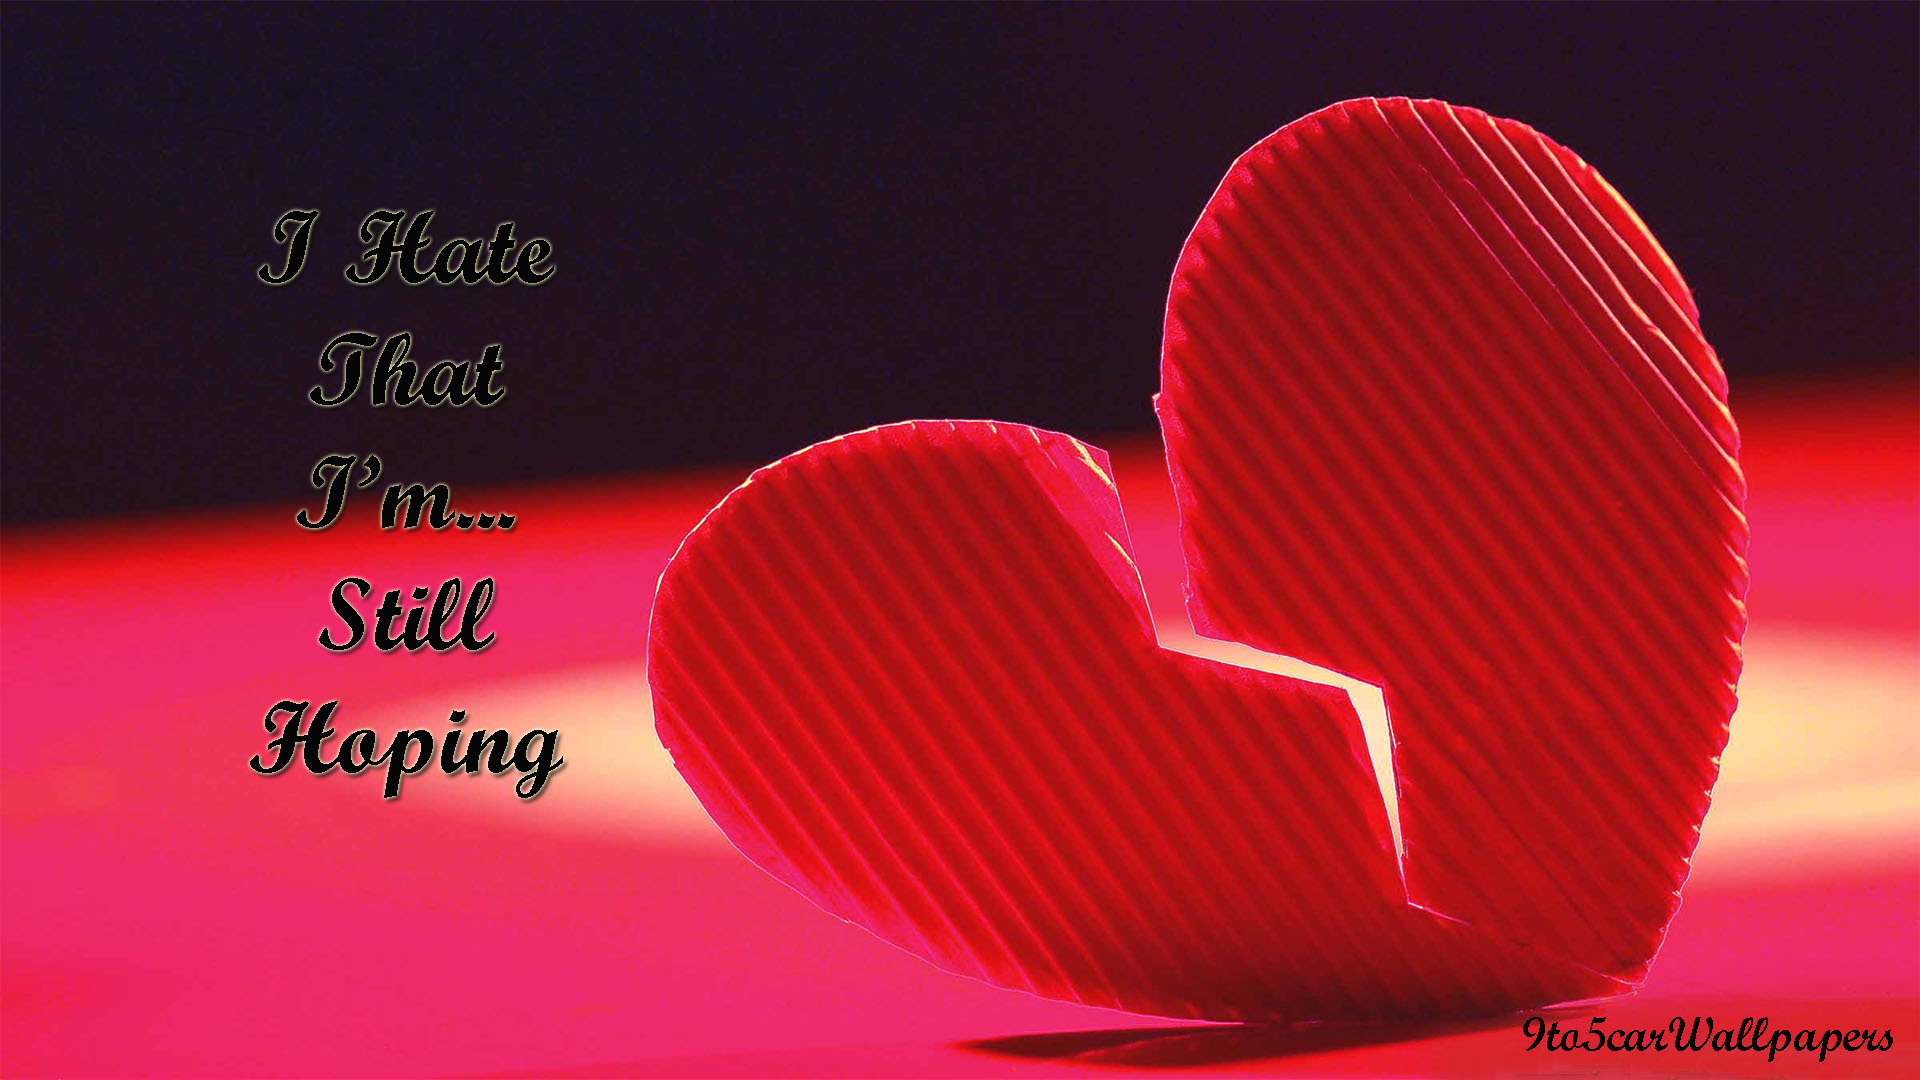 sad wallpaper hd,heart,red,love,valentine's day,text